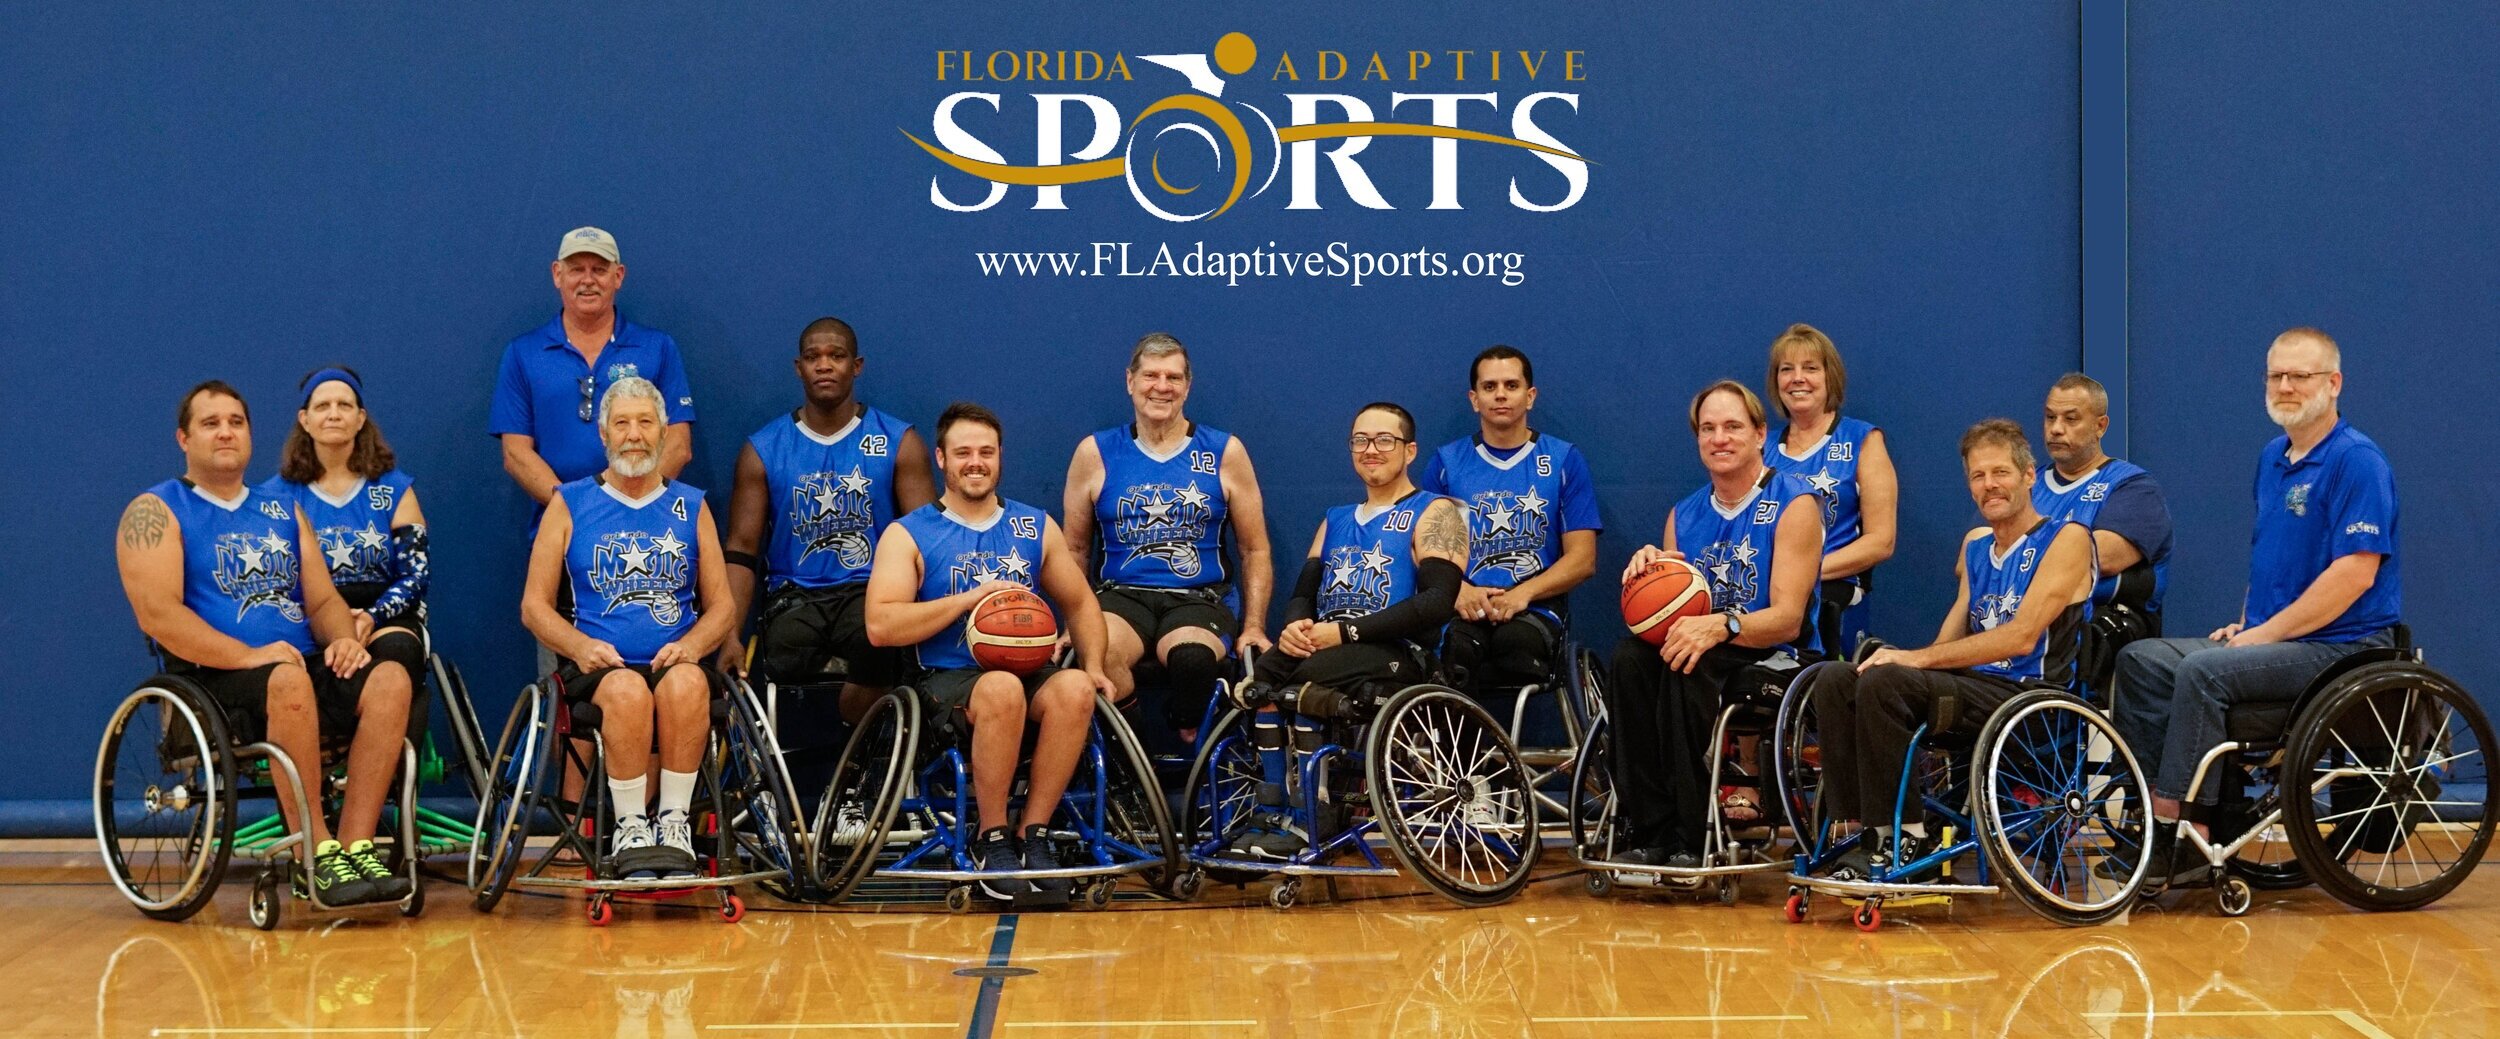 Florida Adaptive Sports